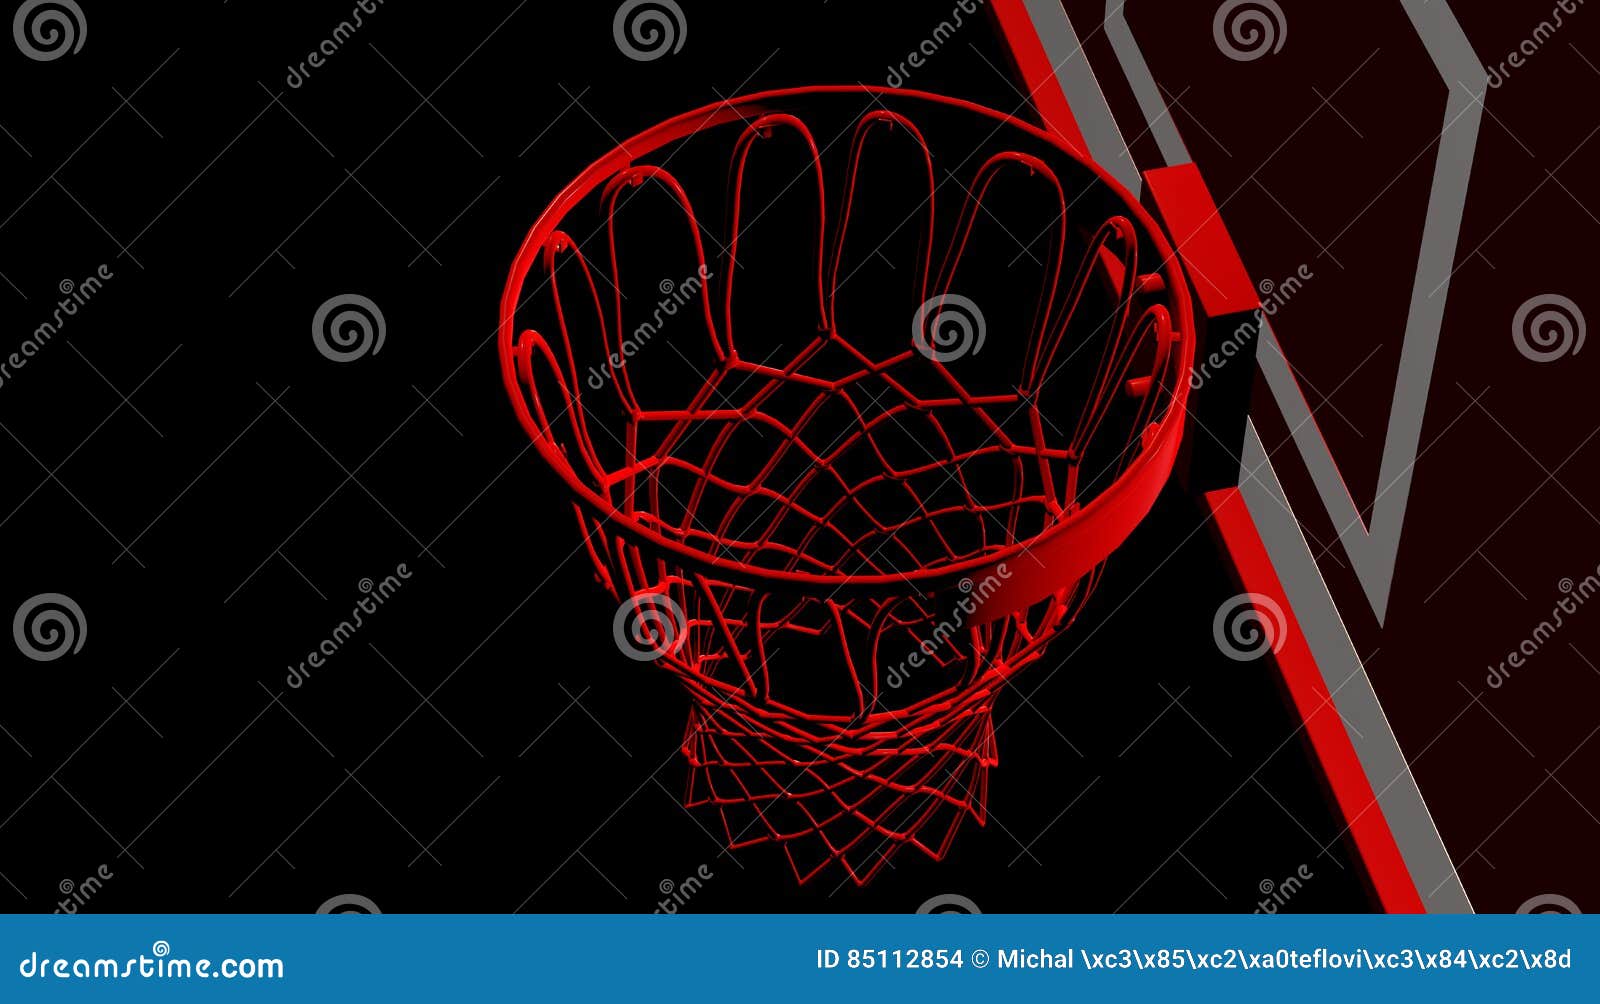 RED Net of a Basketball Hoop on Various Material and Background, 3d Render  Stock Illustration - Illustration of black, basket: 85112854